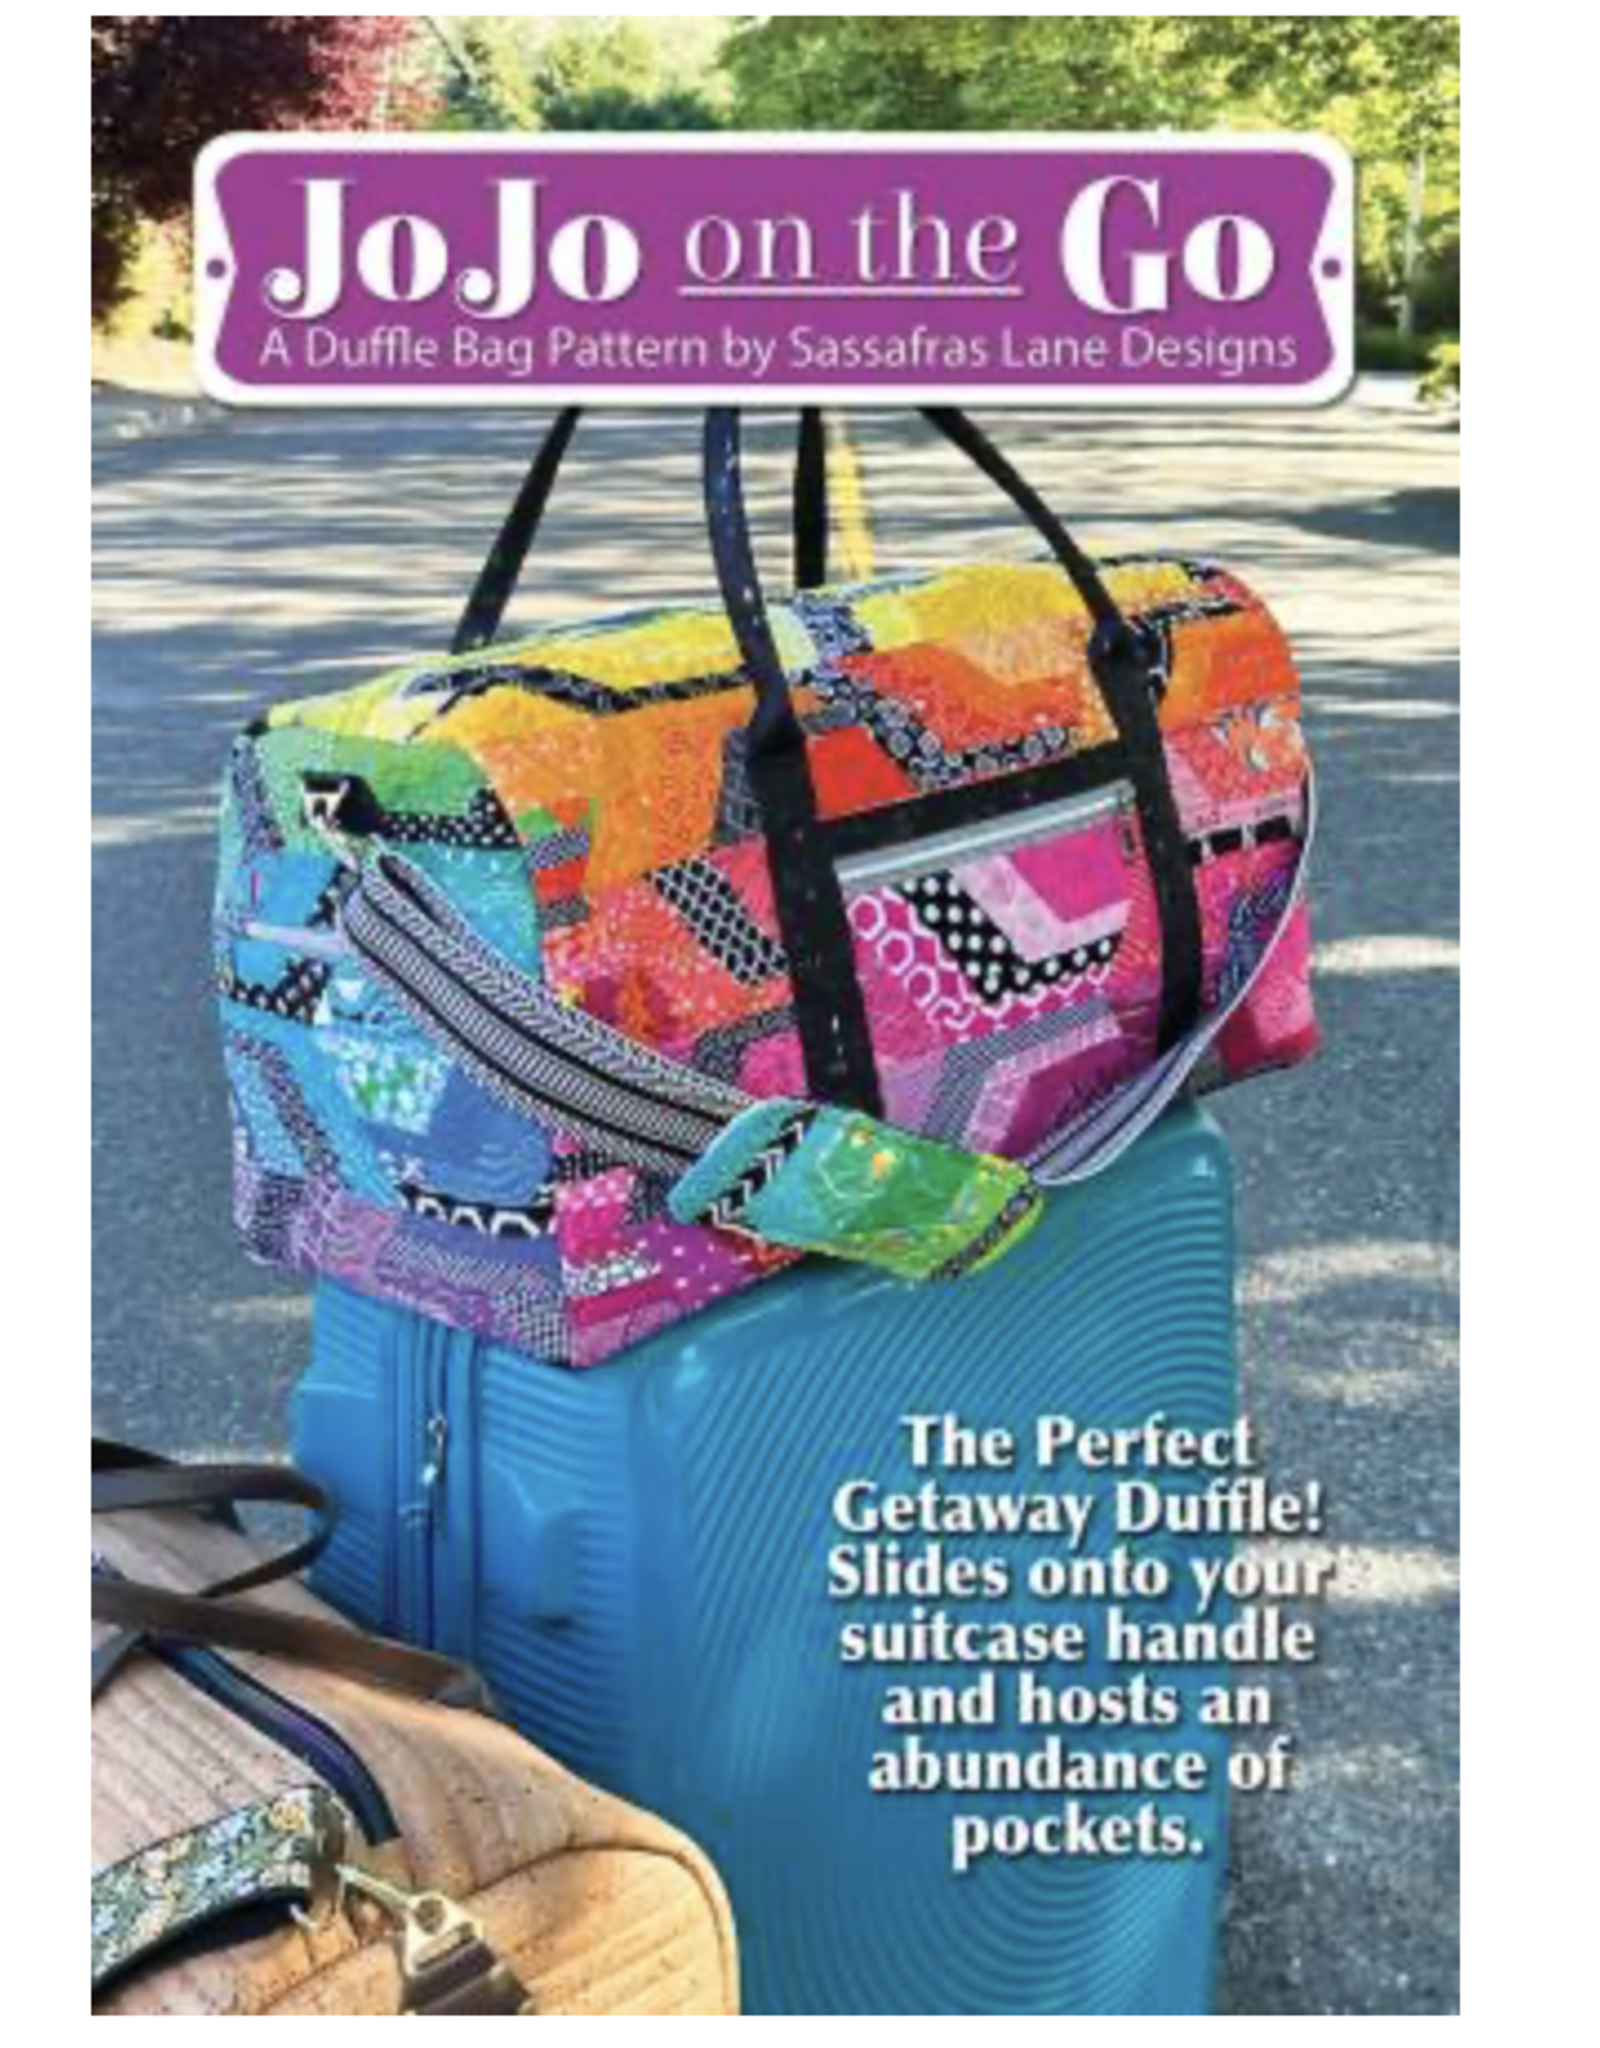 JoJo on the Go Duffle Bag